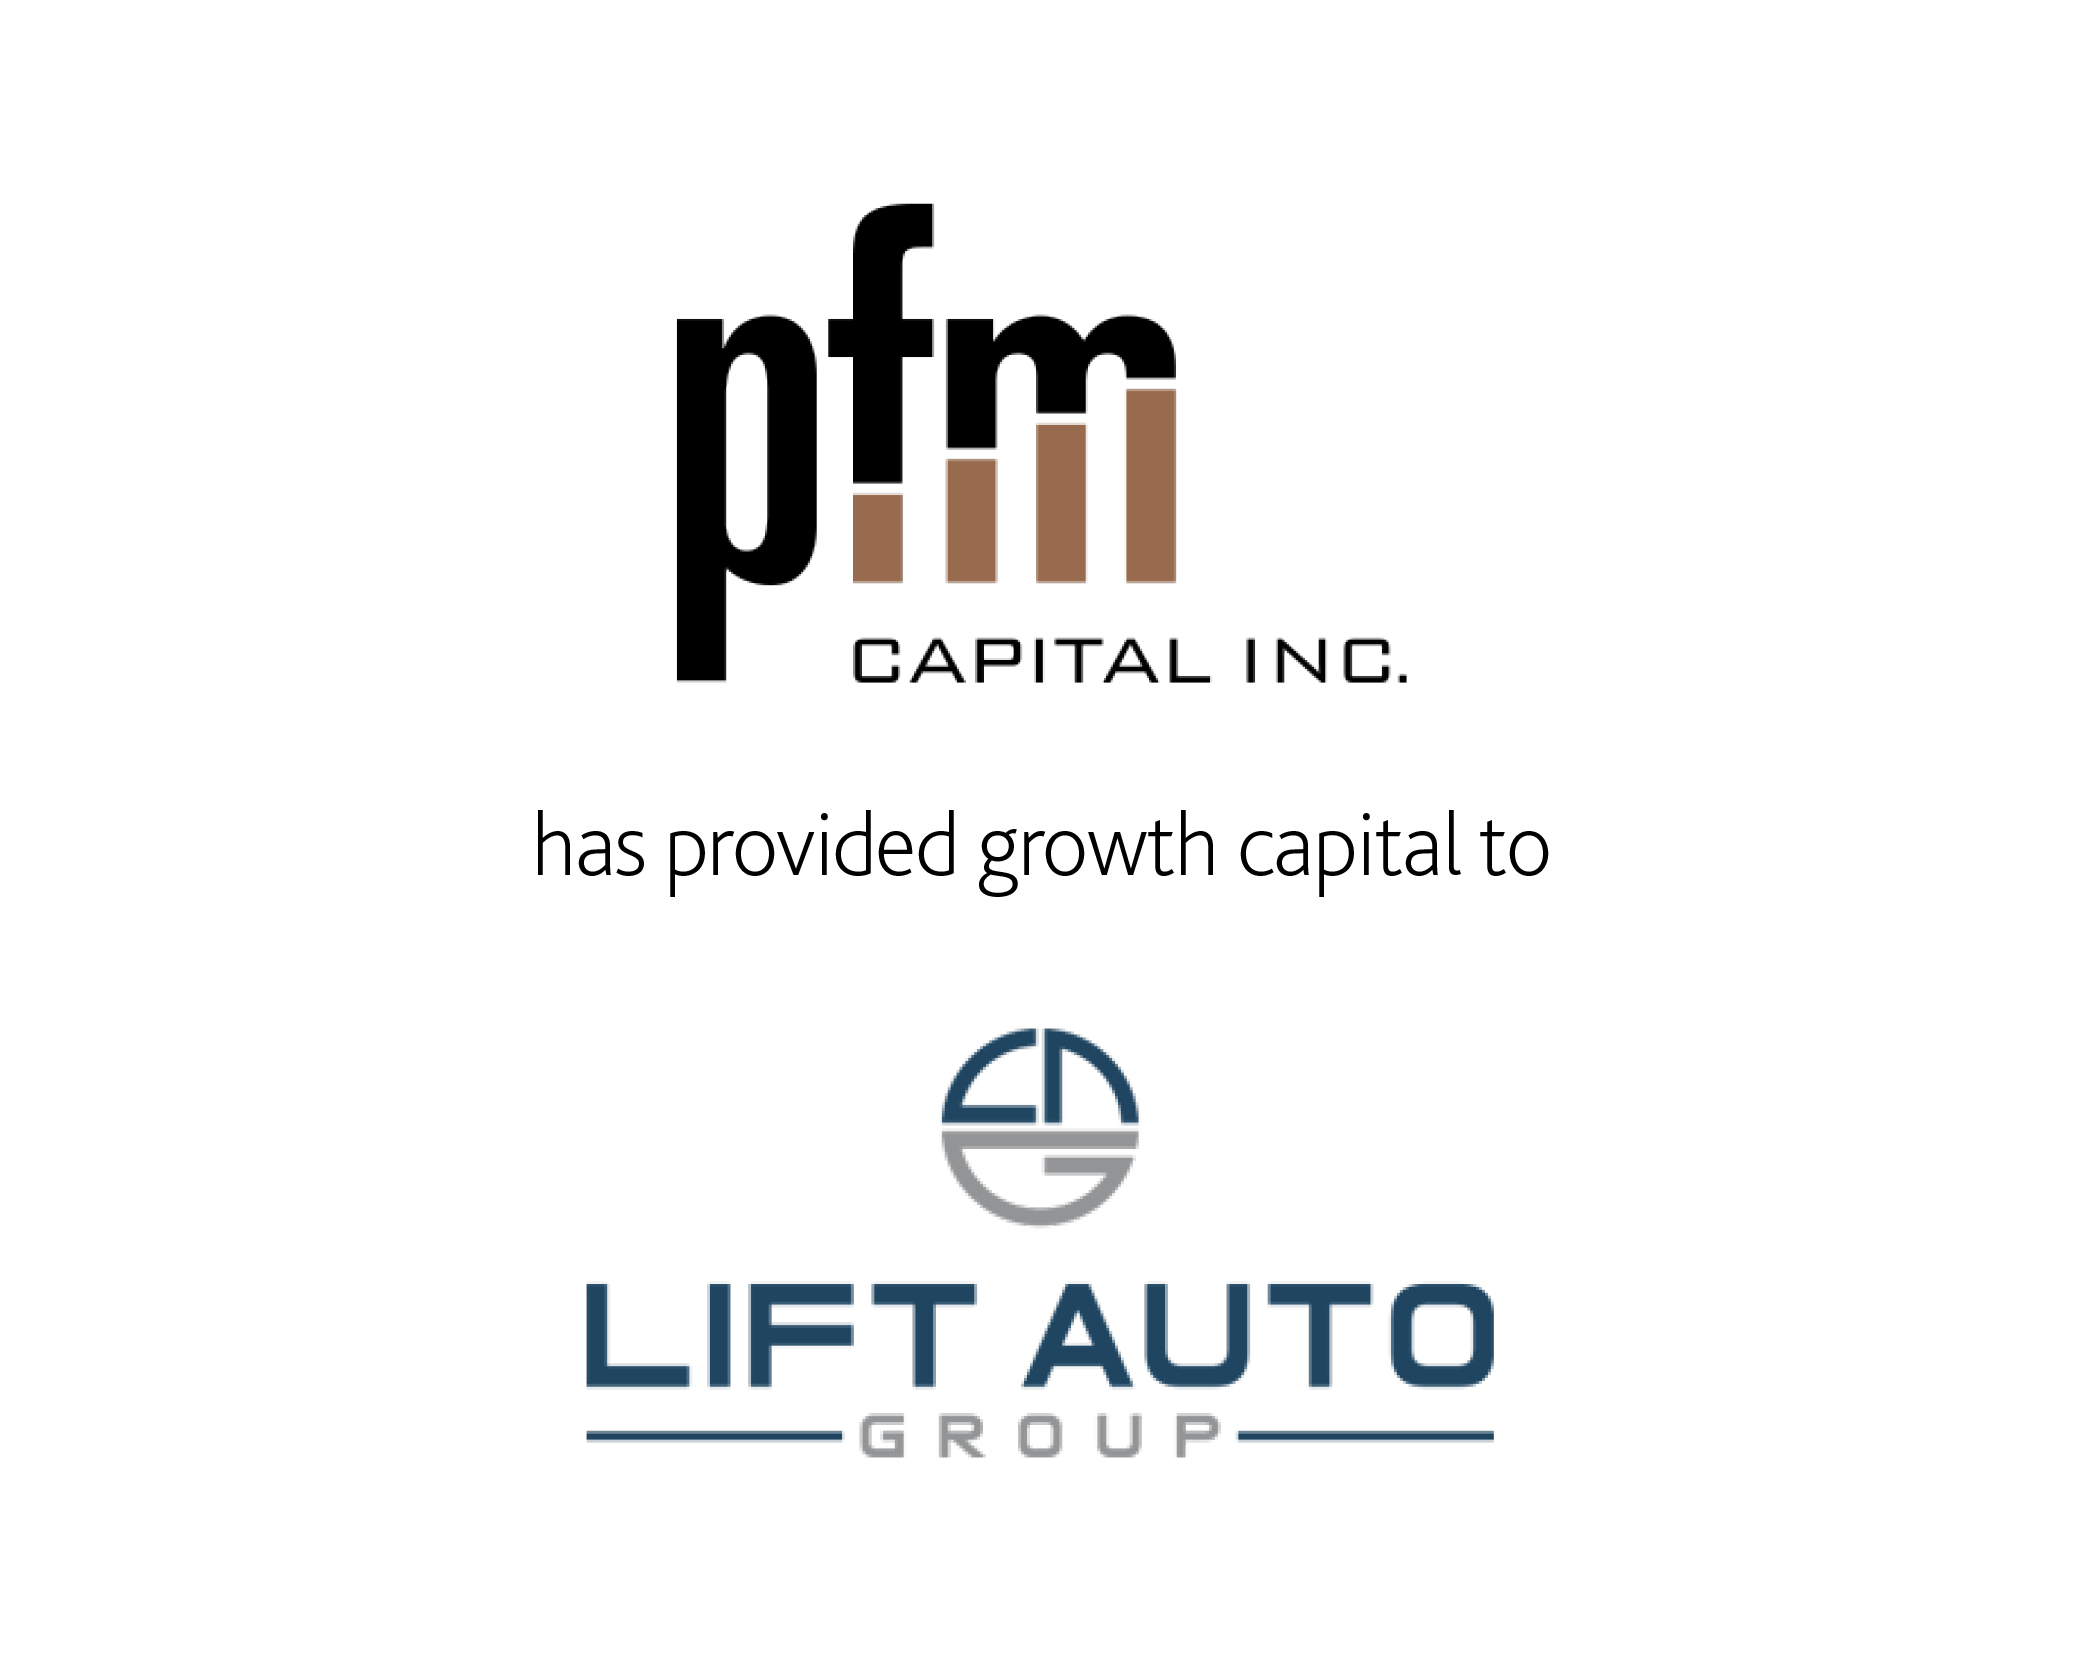 pfm capital inc has provided growth capital to Lift Auto Group